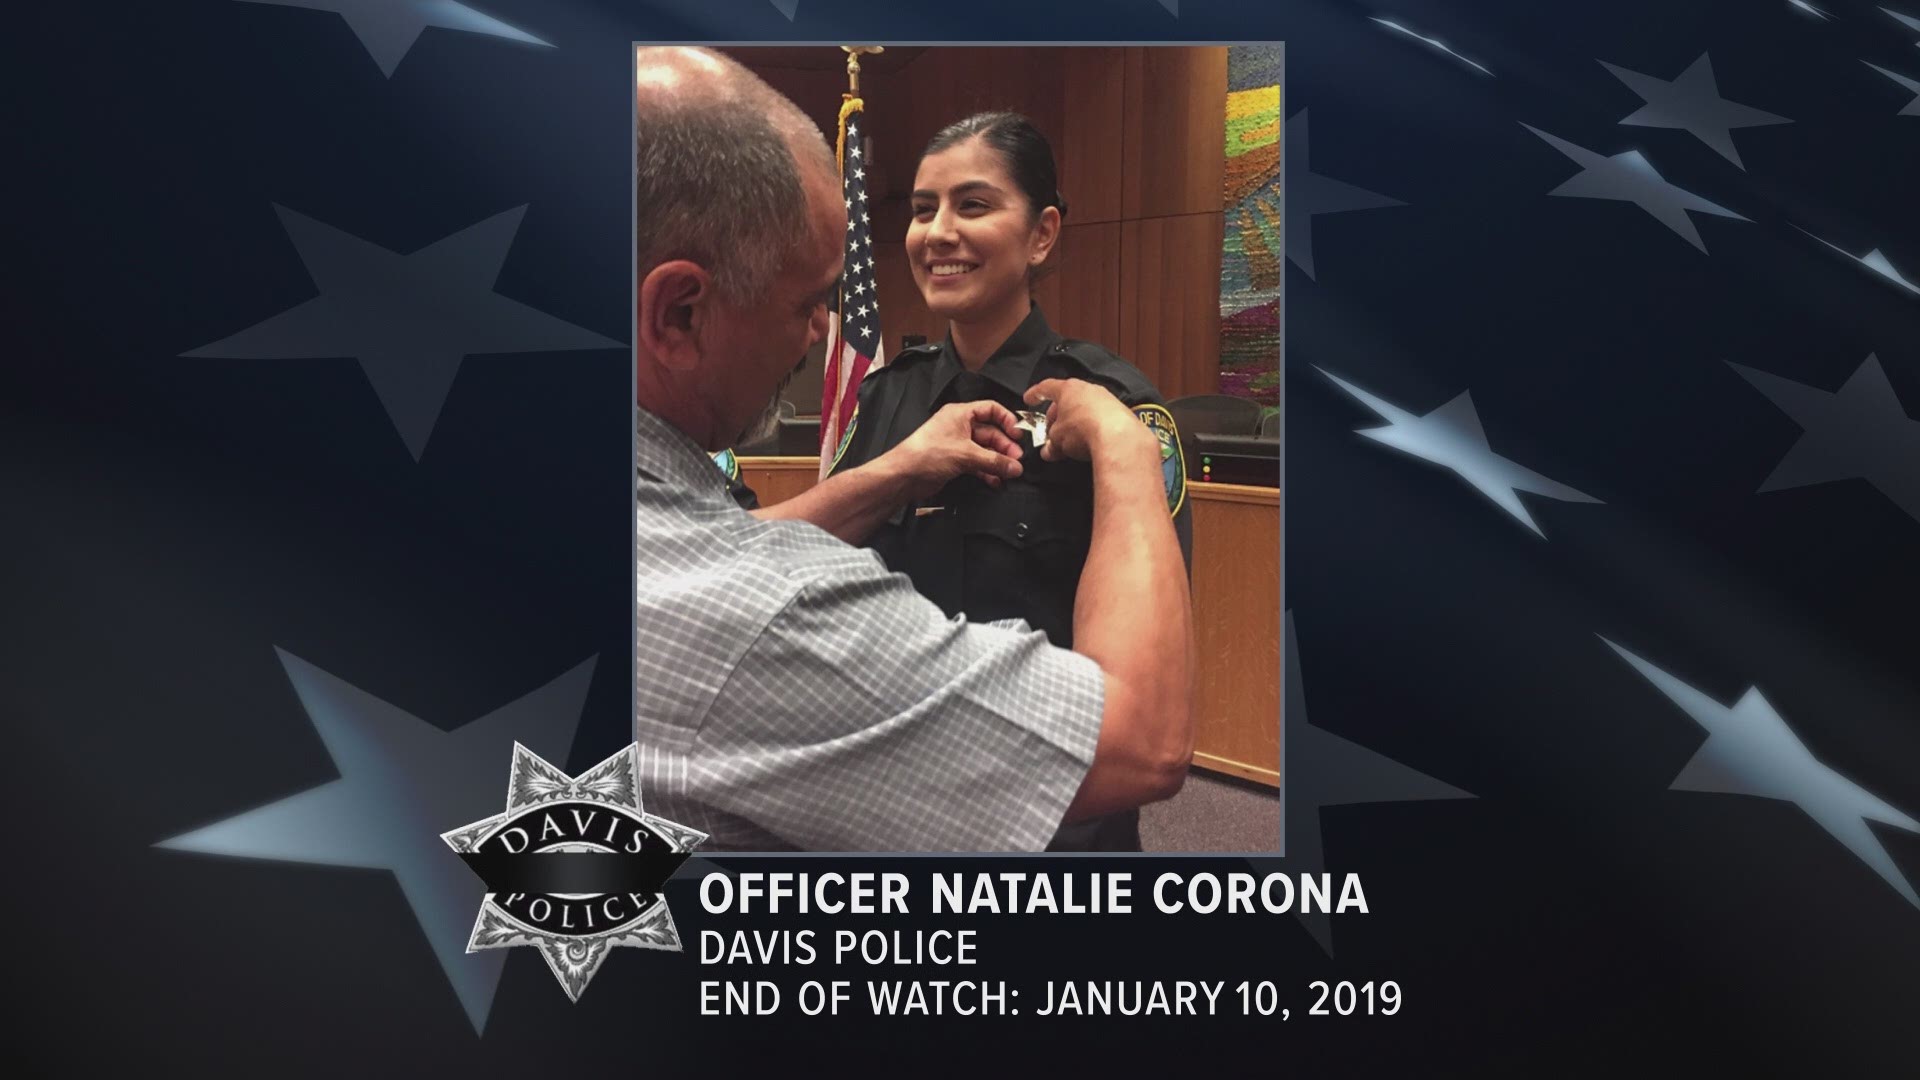 End of Watch: Davis Police Officer Natalie Corona